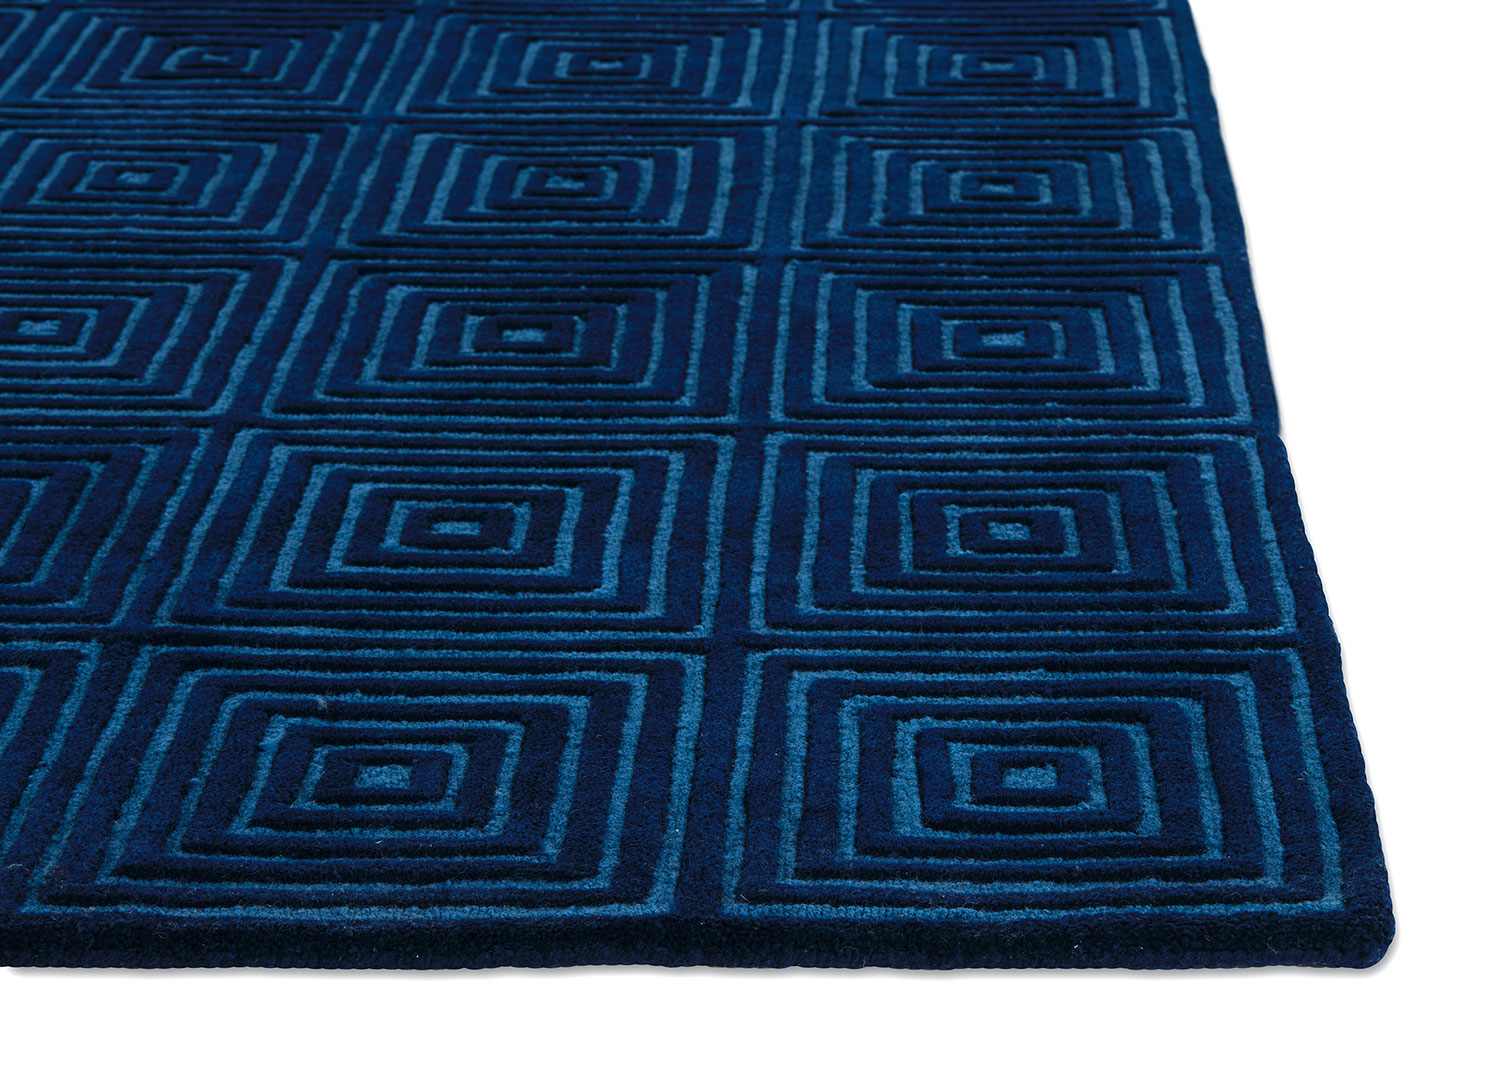 A corner of a deep blue, modern area rug called Duke Blue by Angela Adams